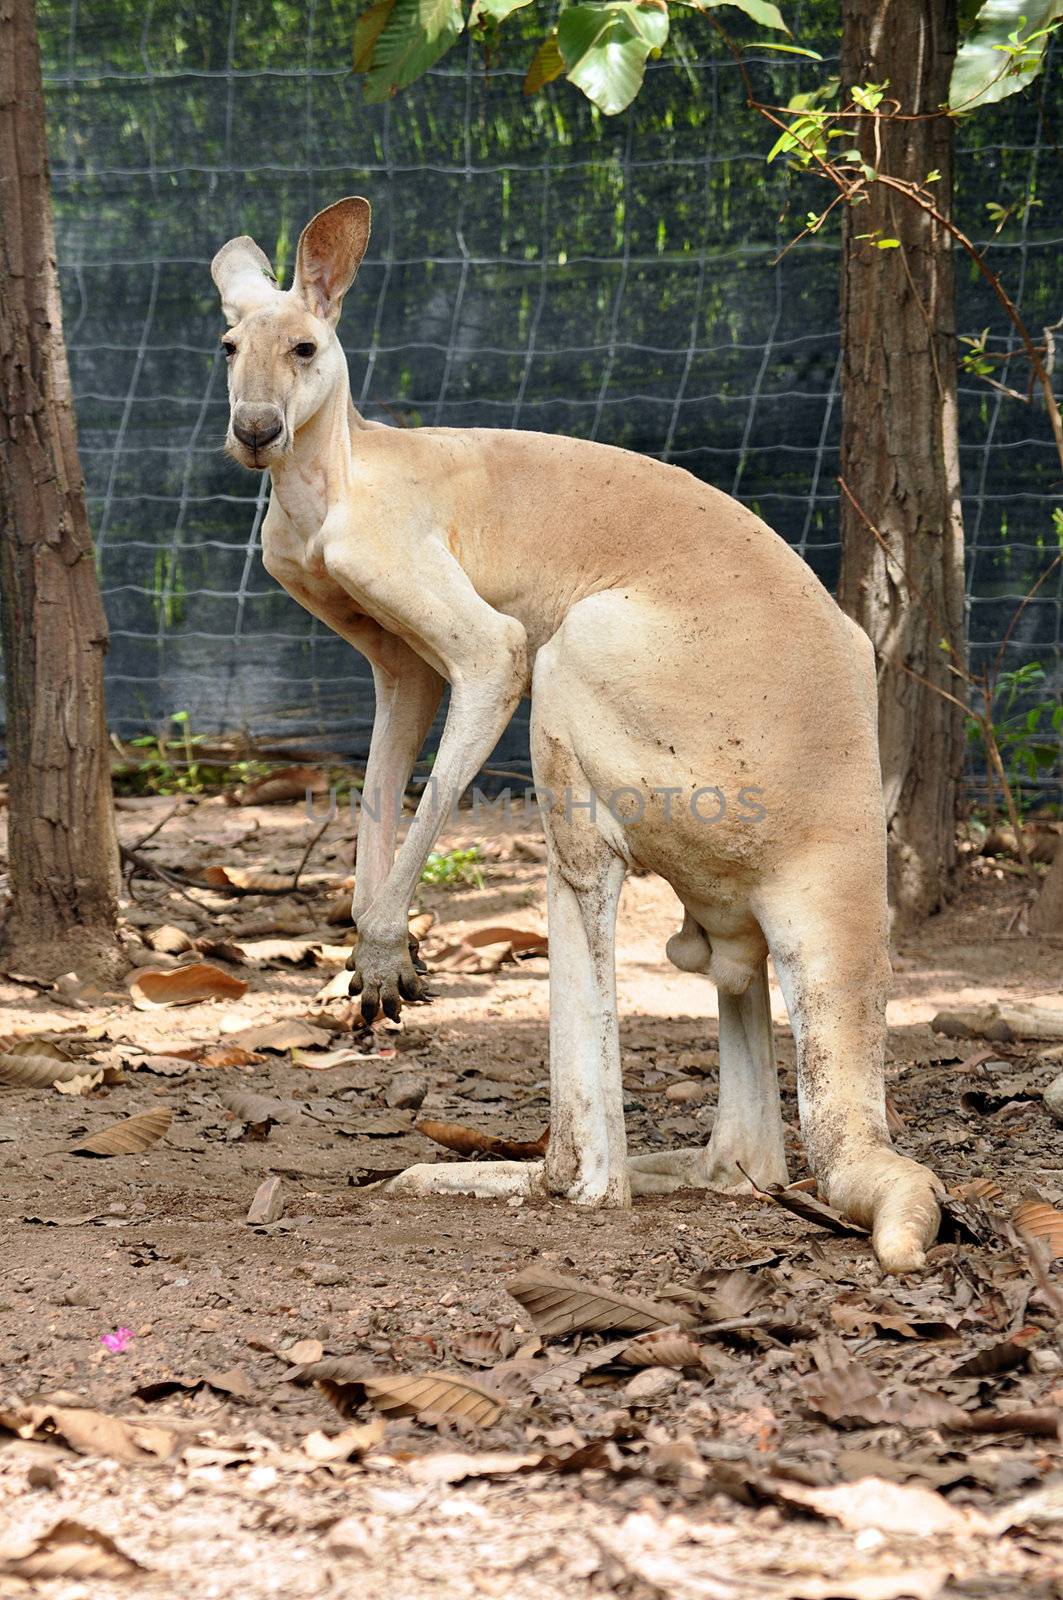  kangaroo by MaZiKab